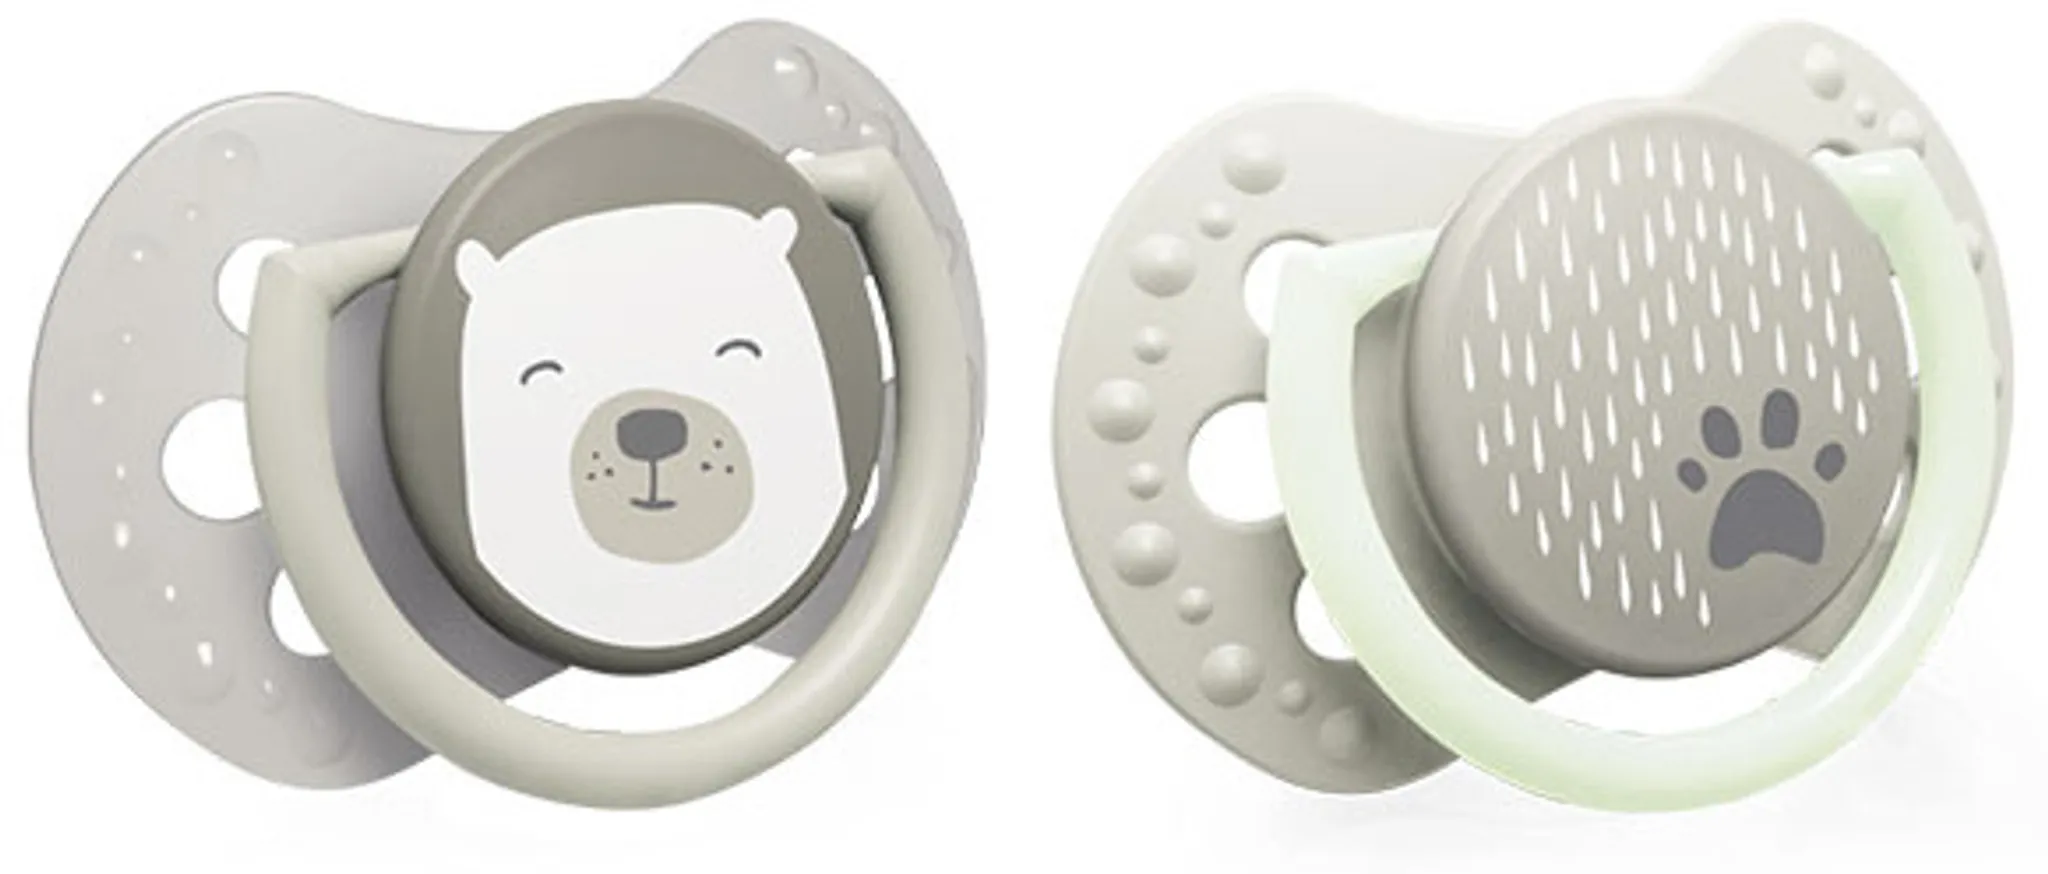 LOVI Schnuller 6-18 Monate Buddy Bear Kollektion Hygieneschutzhülle BPA-frei 2 Stück Silikon 